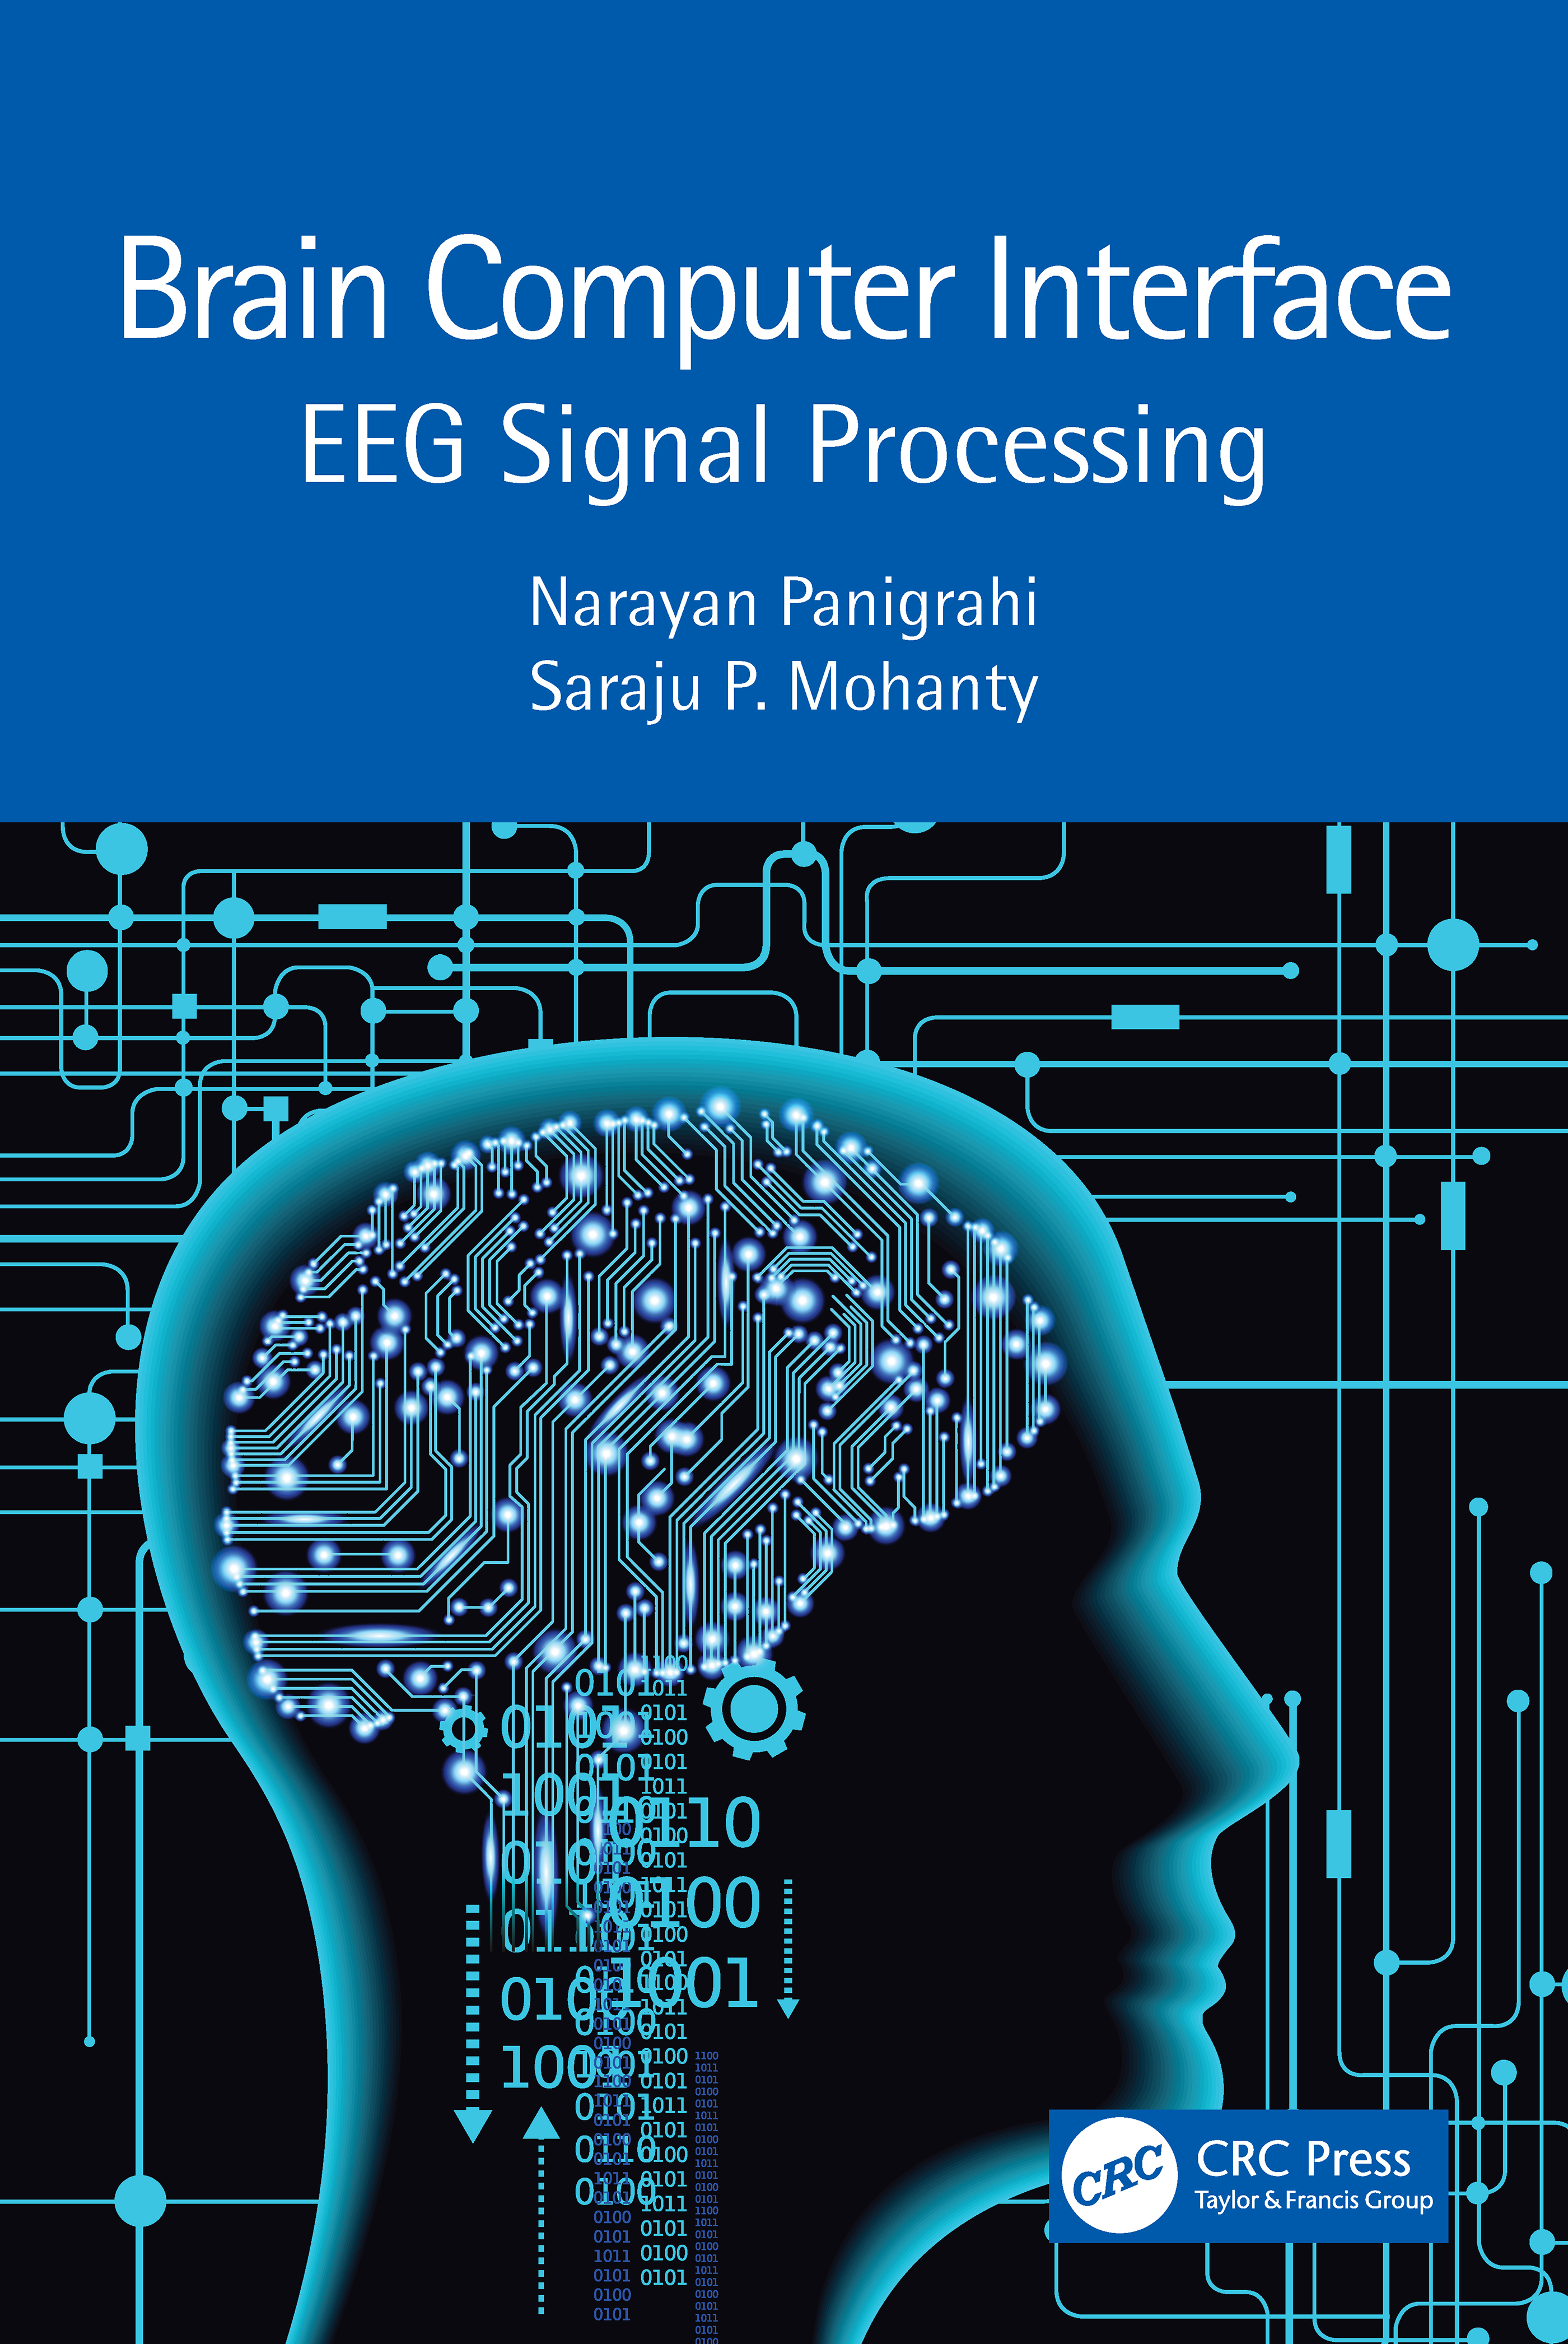 Brain Computer Interface: EEG Signal Processing, CRC Press, 2022, ISBN: 978-1032148410